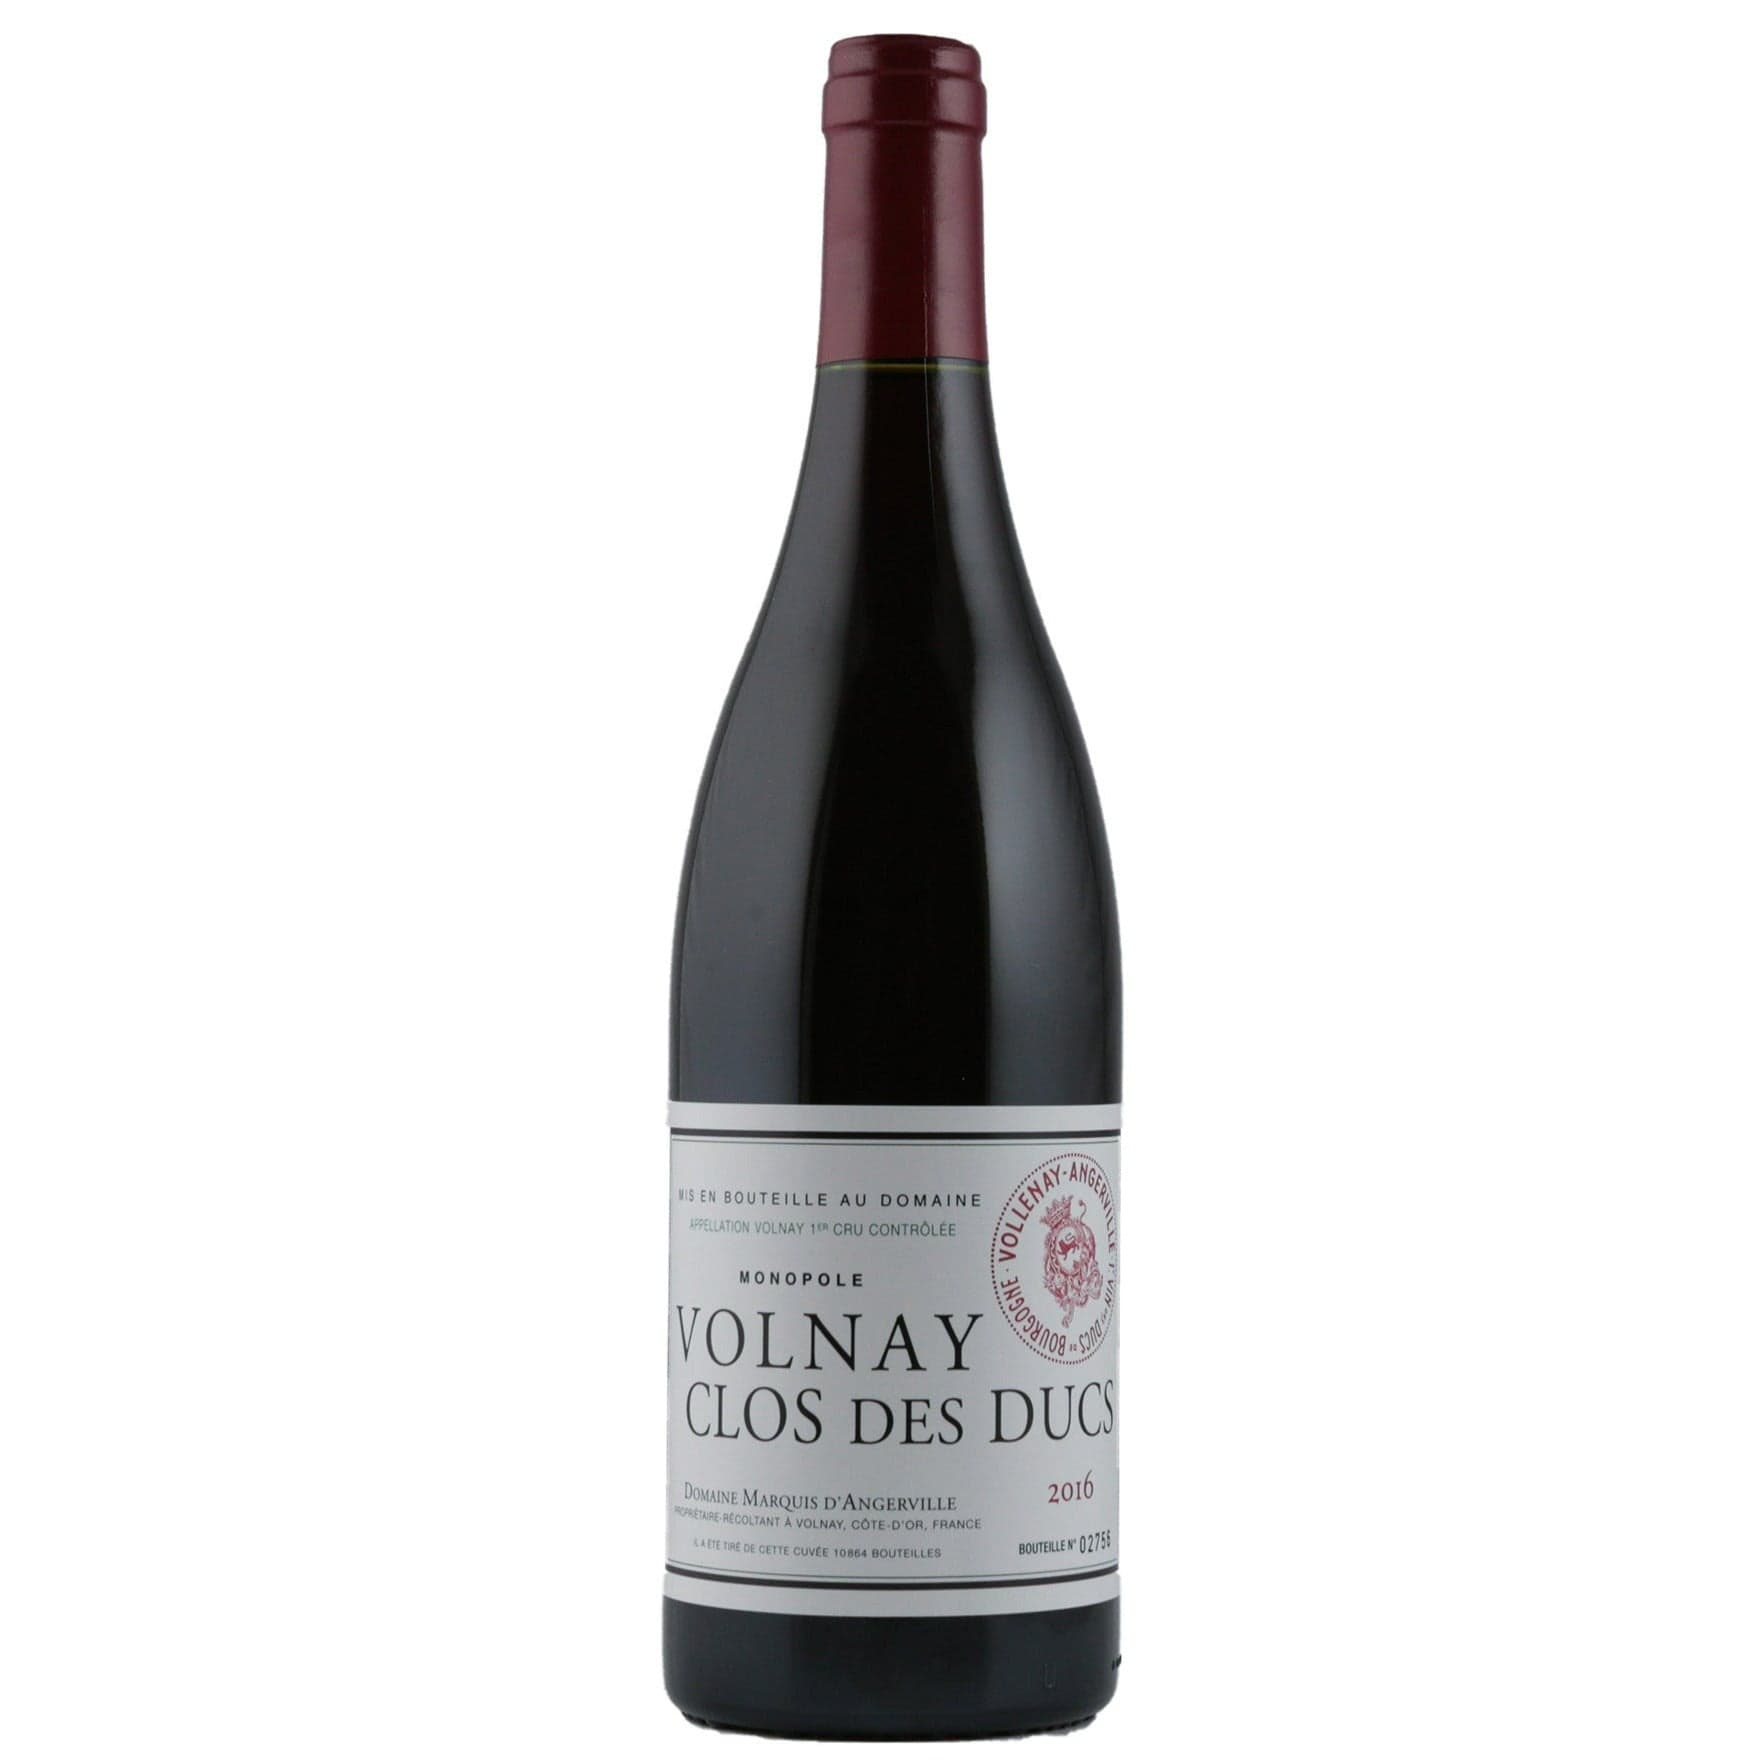 Single bottle of Red wine Dom. Marquis d'Angerville, Clos des Ducs Premier Cru, Volnay, 2016 100% Pinot Noir